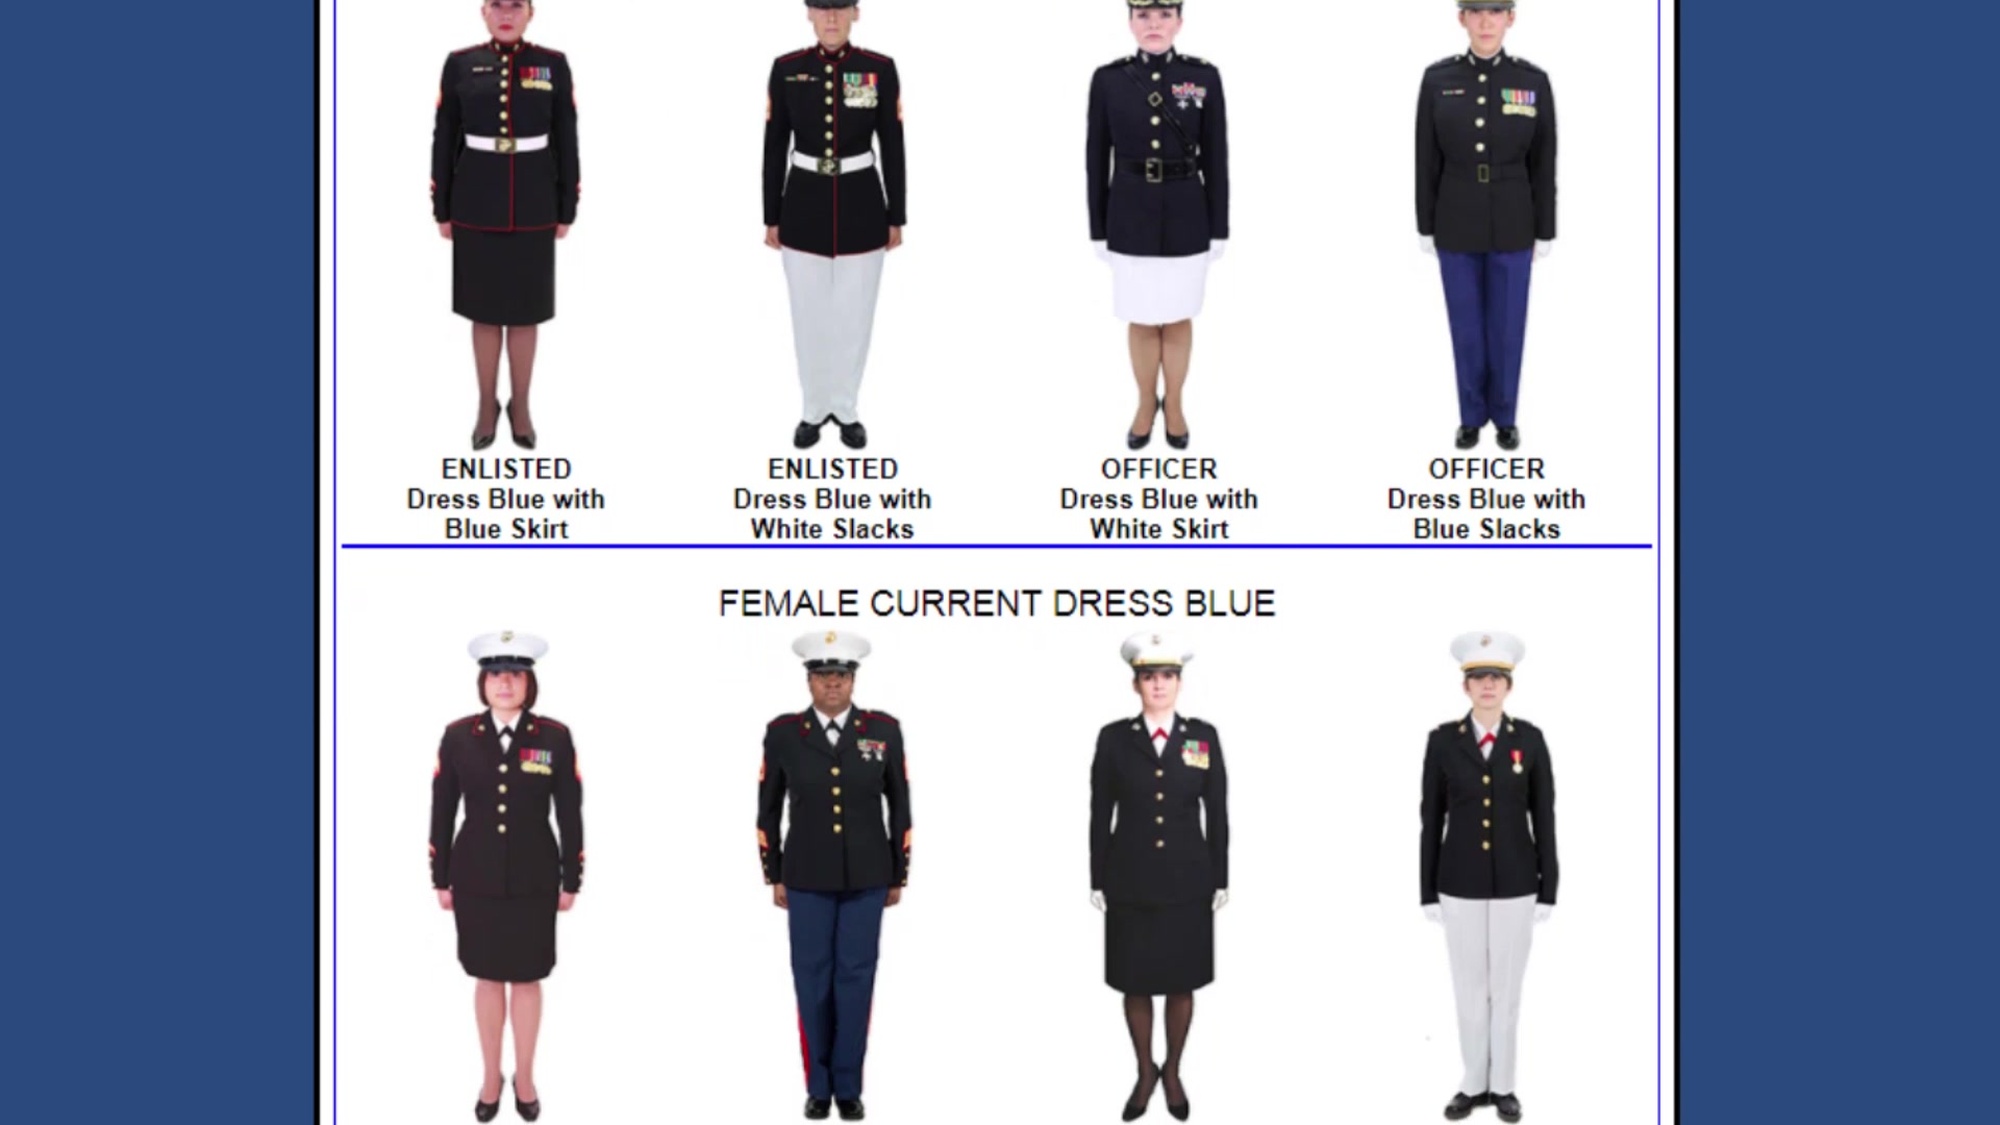 Evening Wear Dress Blues USMC